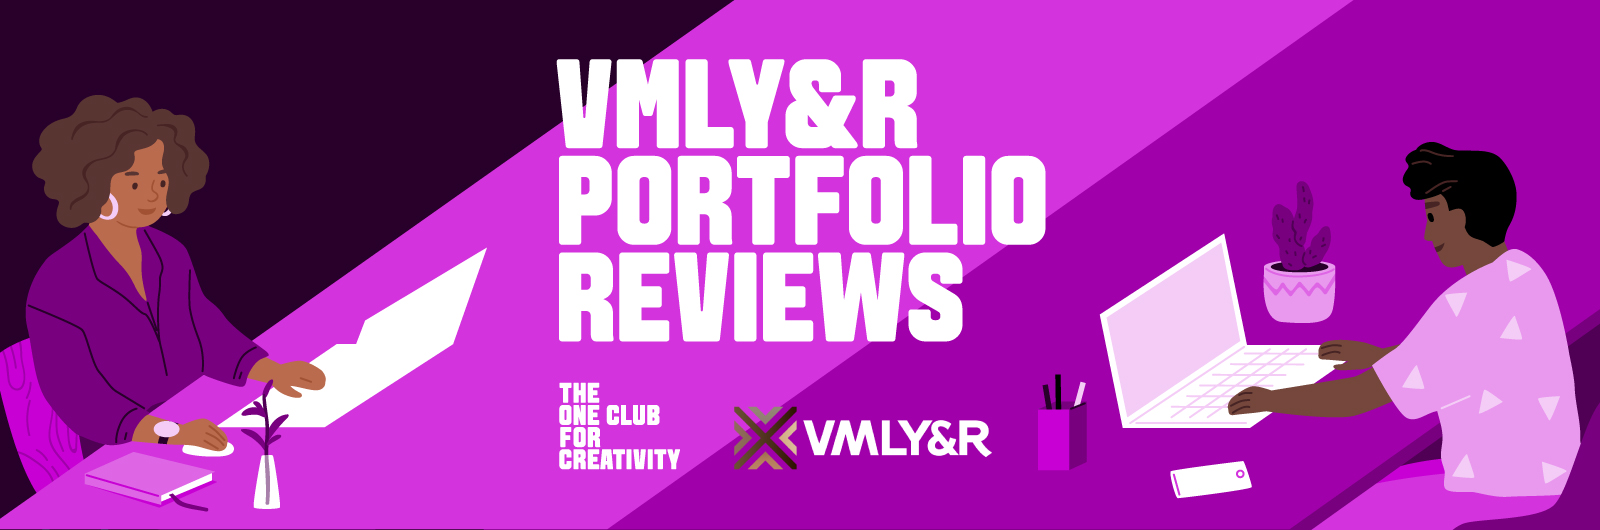 VMLY&R Portfolio Reviews